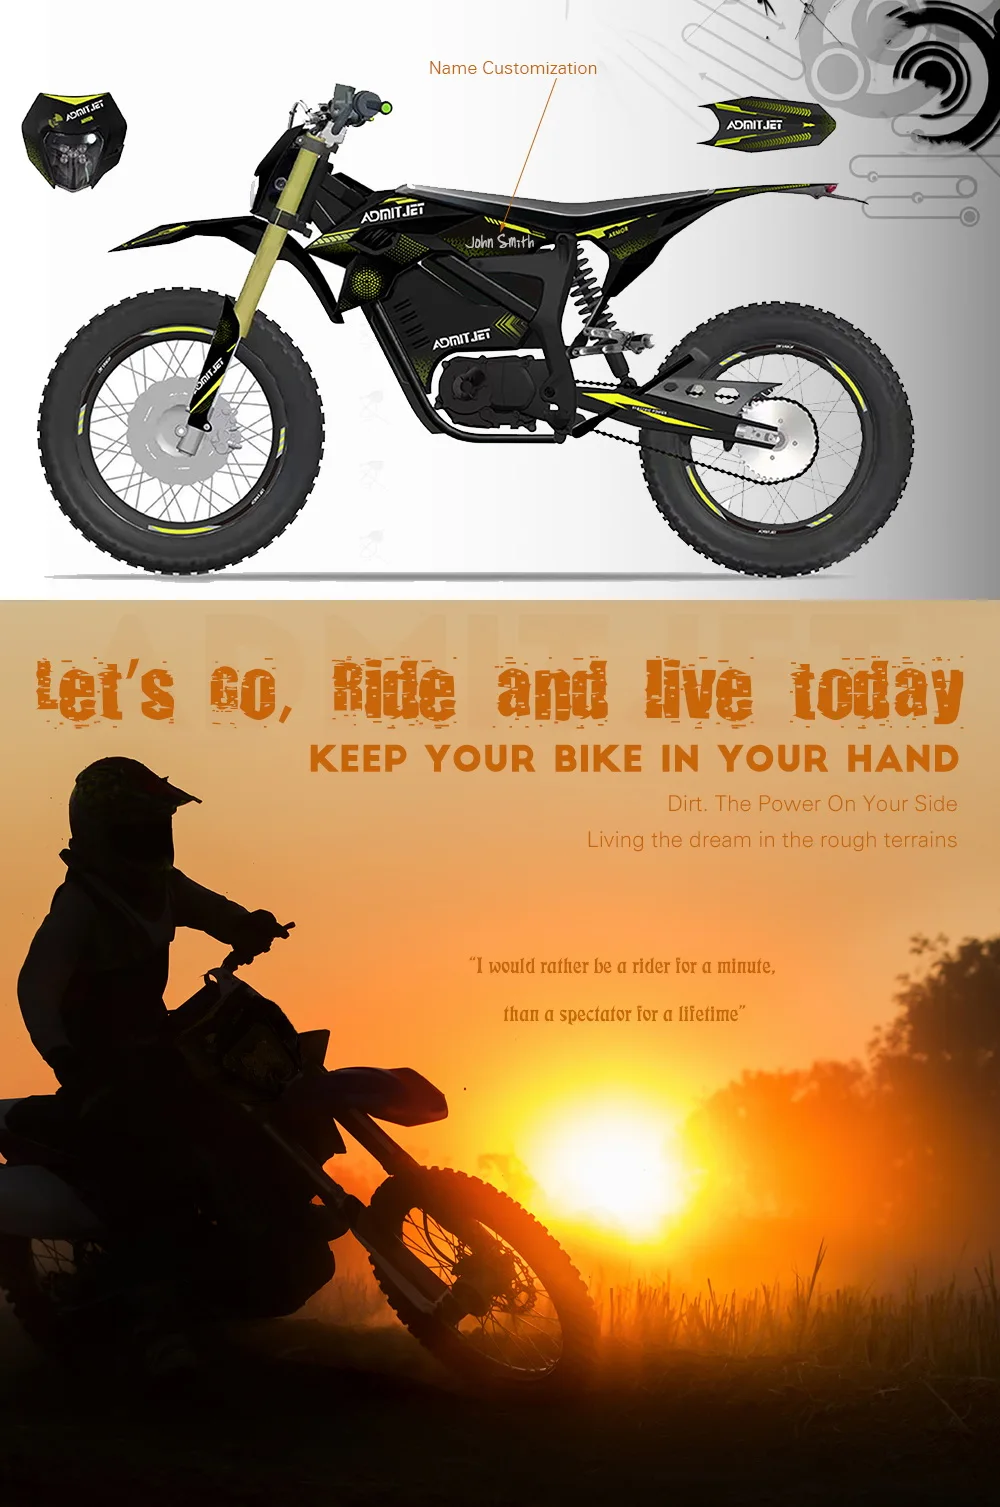 Motorcycle Style Electric Bike: Enduro Motocycle E Motocross